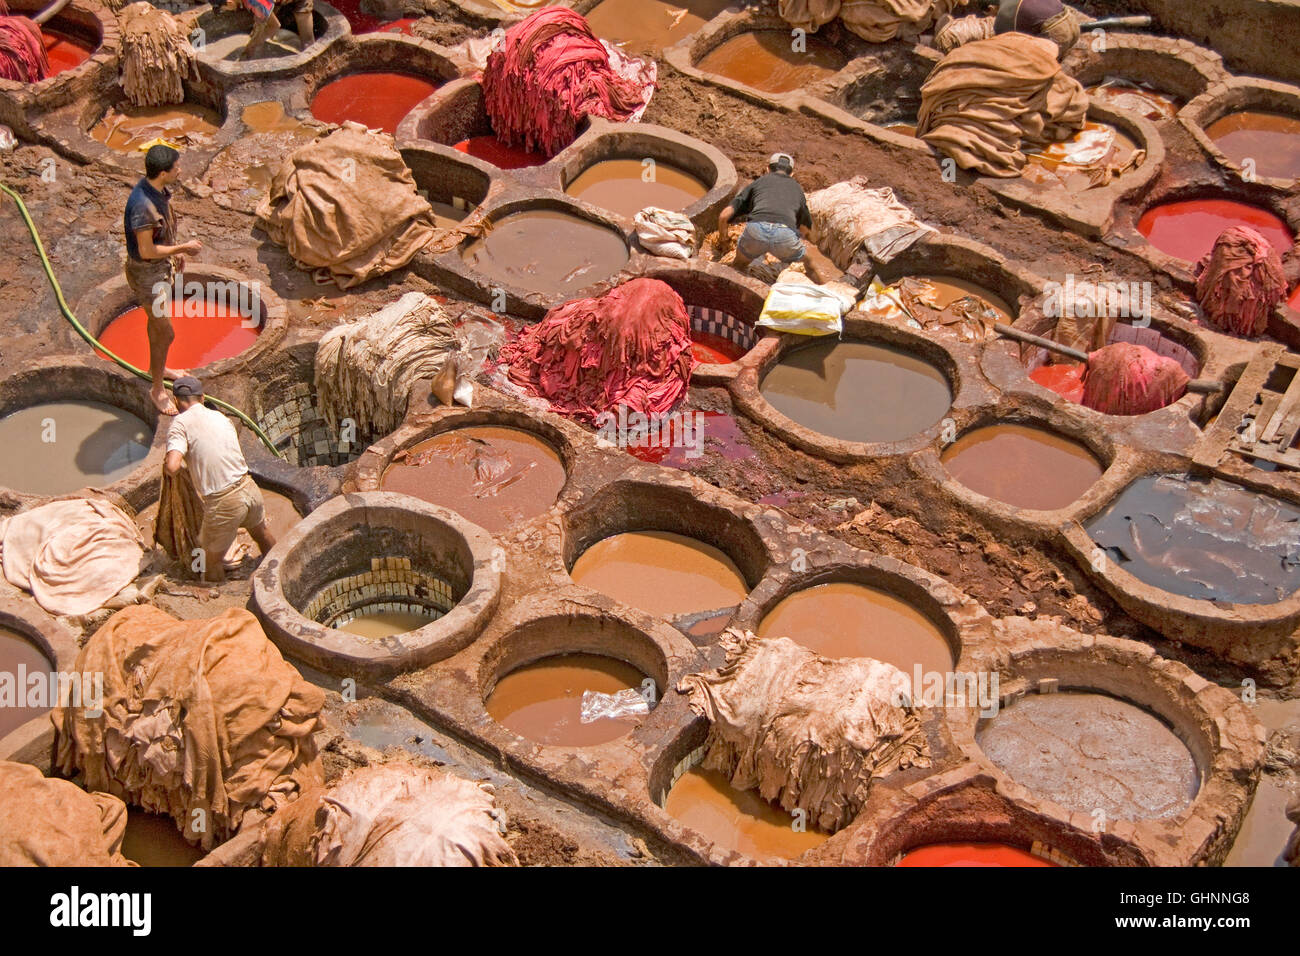 Arbeitnehmer in Bottichen färben Tier verstecken, um in Pantoffeln (Babouche) am berühmten Gerbereien in Fes, Marokko erfolgen. Stockfoto